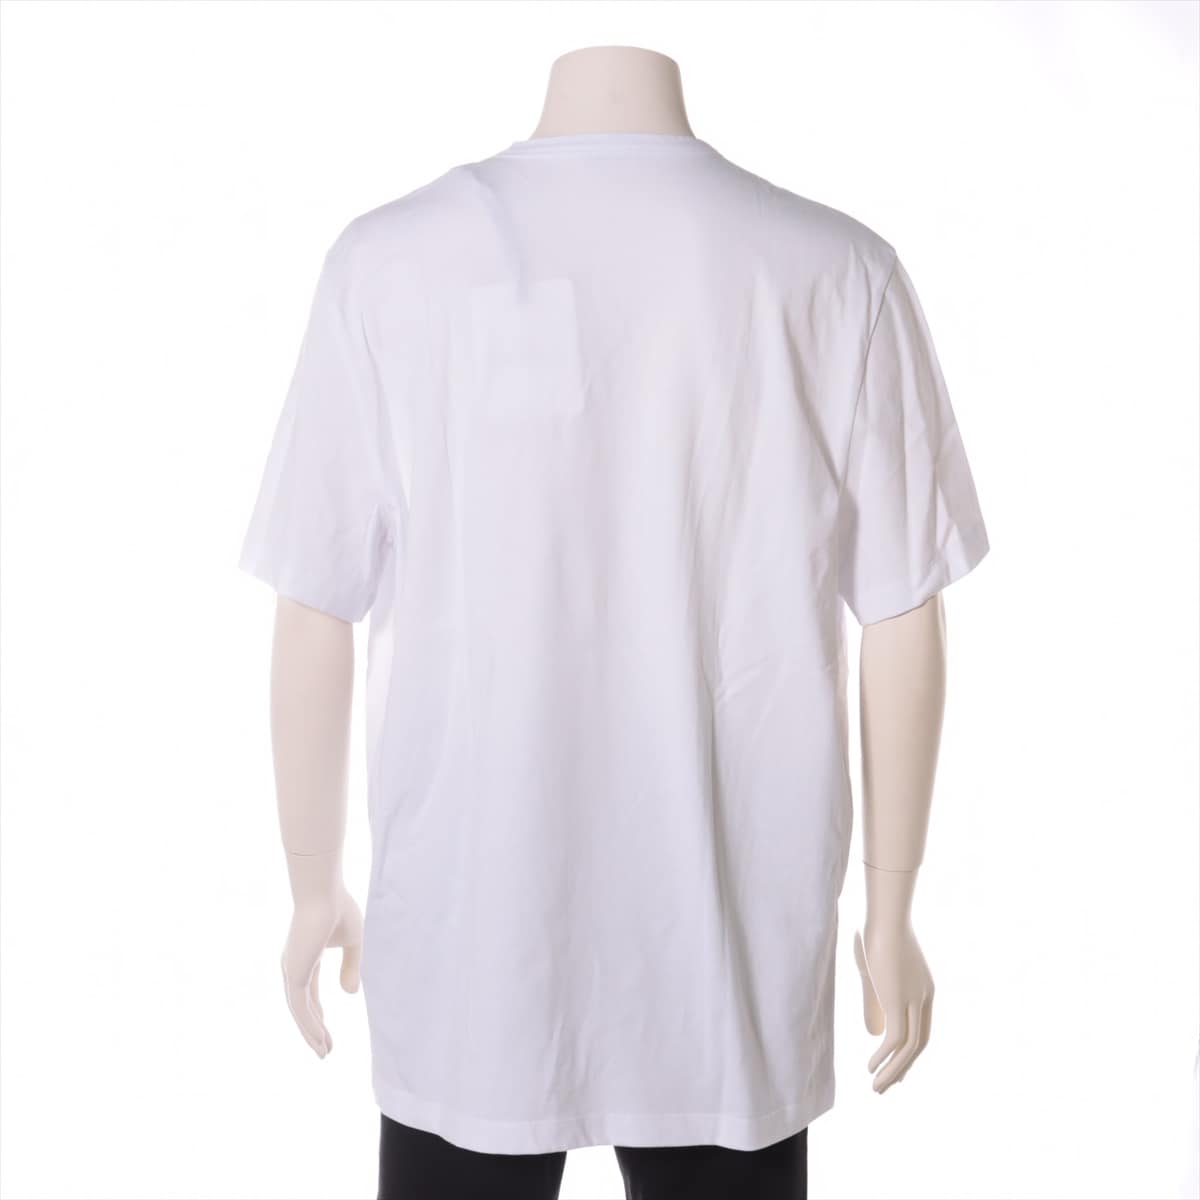 Moncler 20 years Cotton T-shirt XL Men's White  G10918C7E120